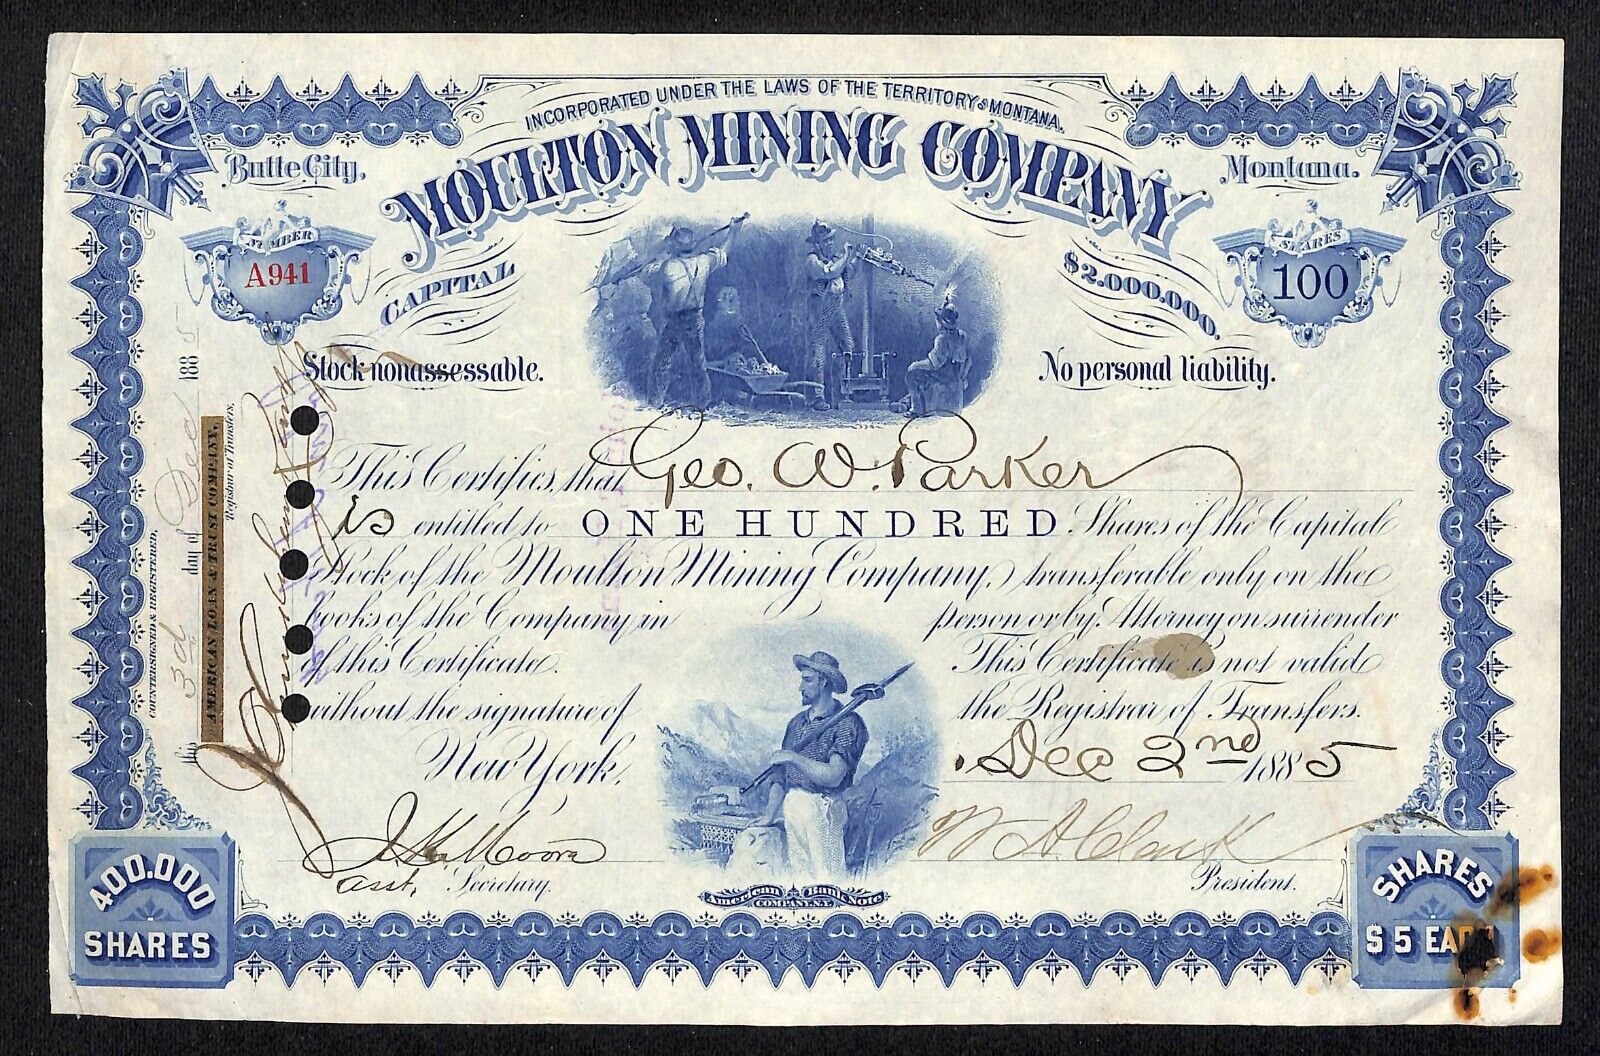 Moulton Mining Company Butte City 1885 Stock Certificate A941 Geo. W. Parker